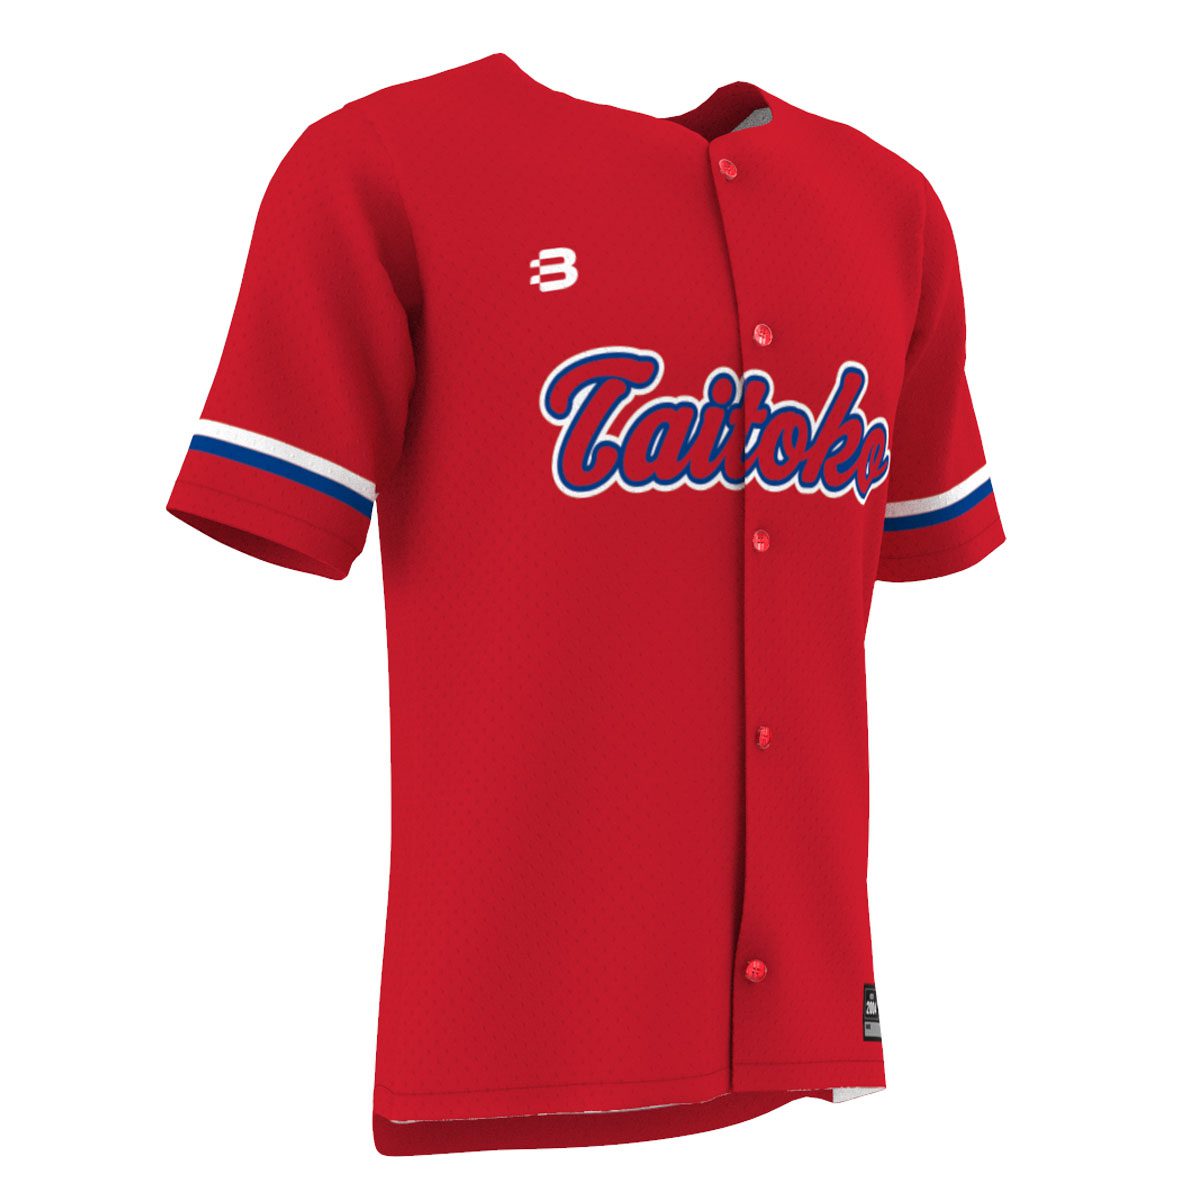 Cuba Baseball Sublimated Fan Jersey